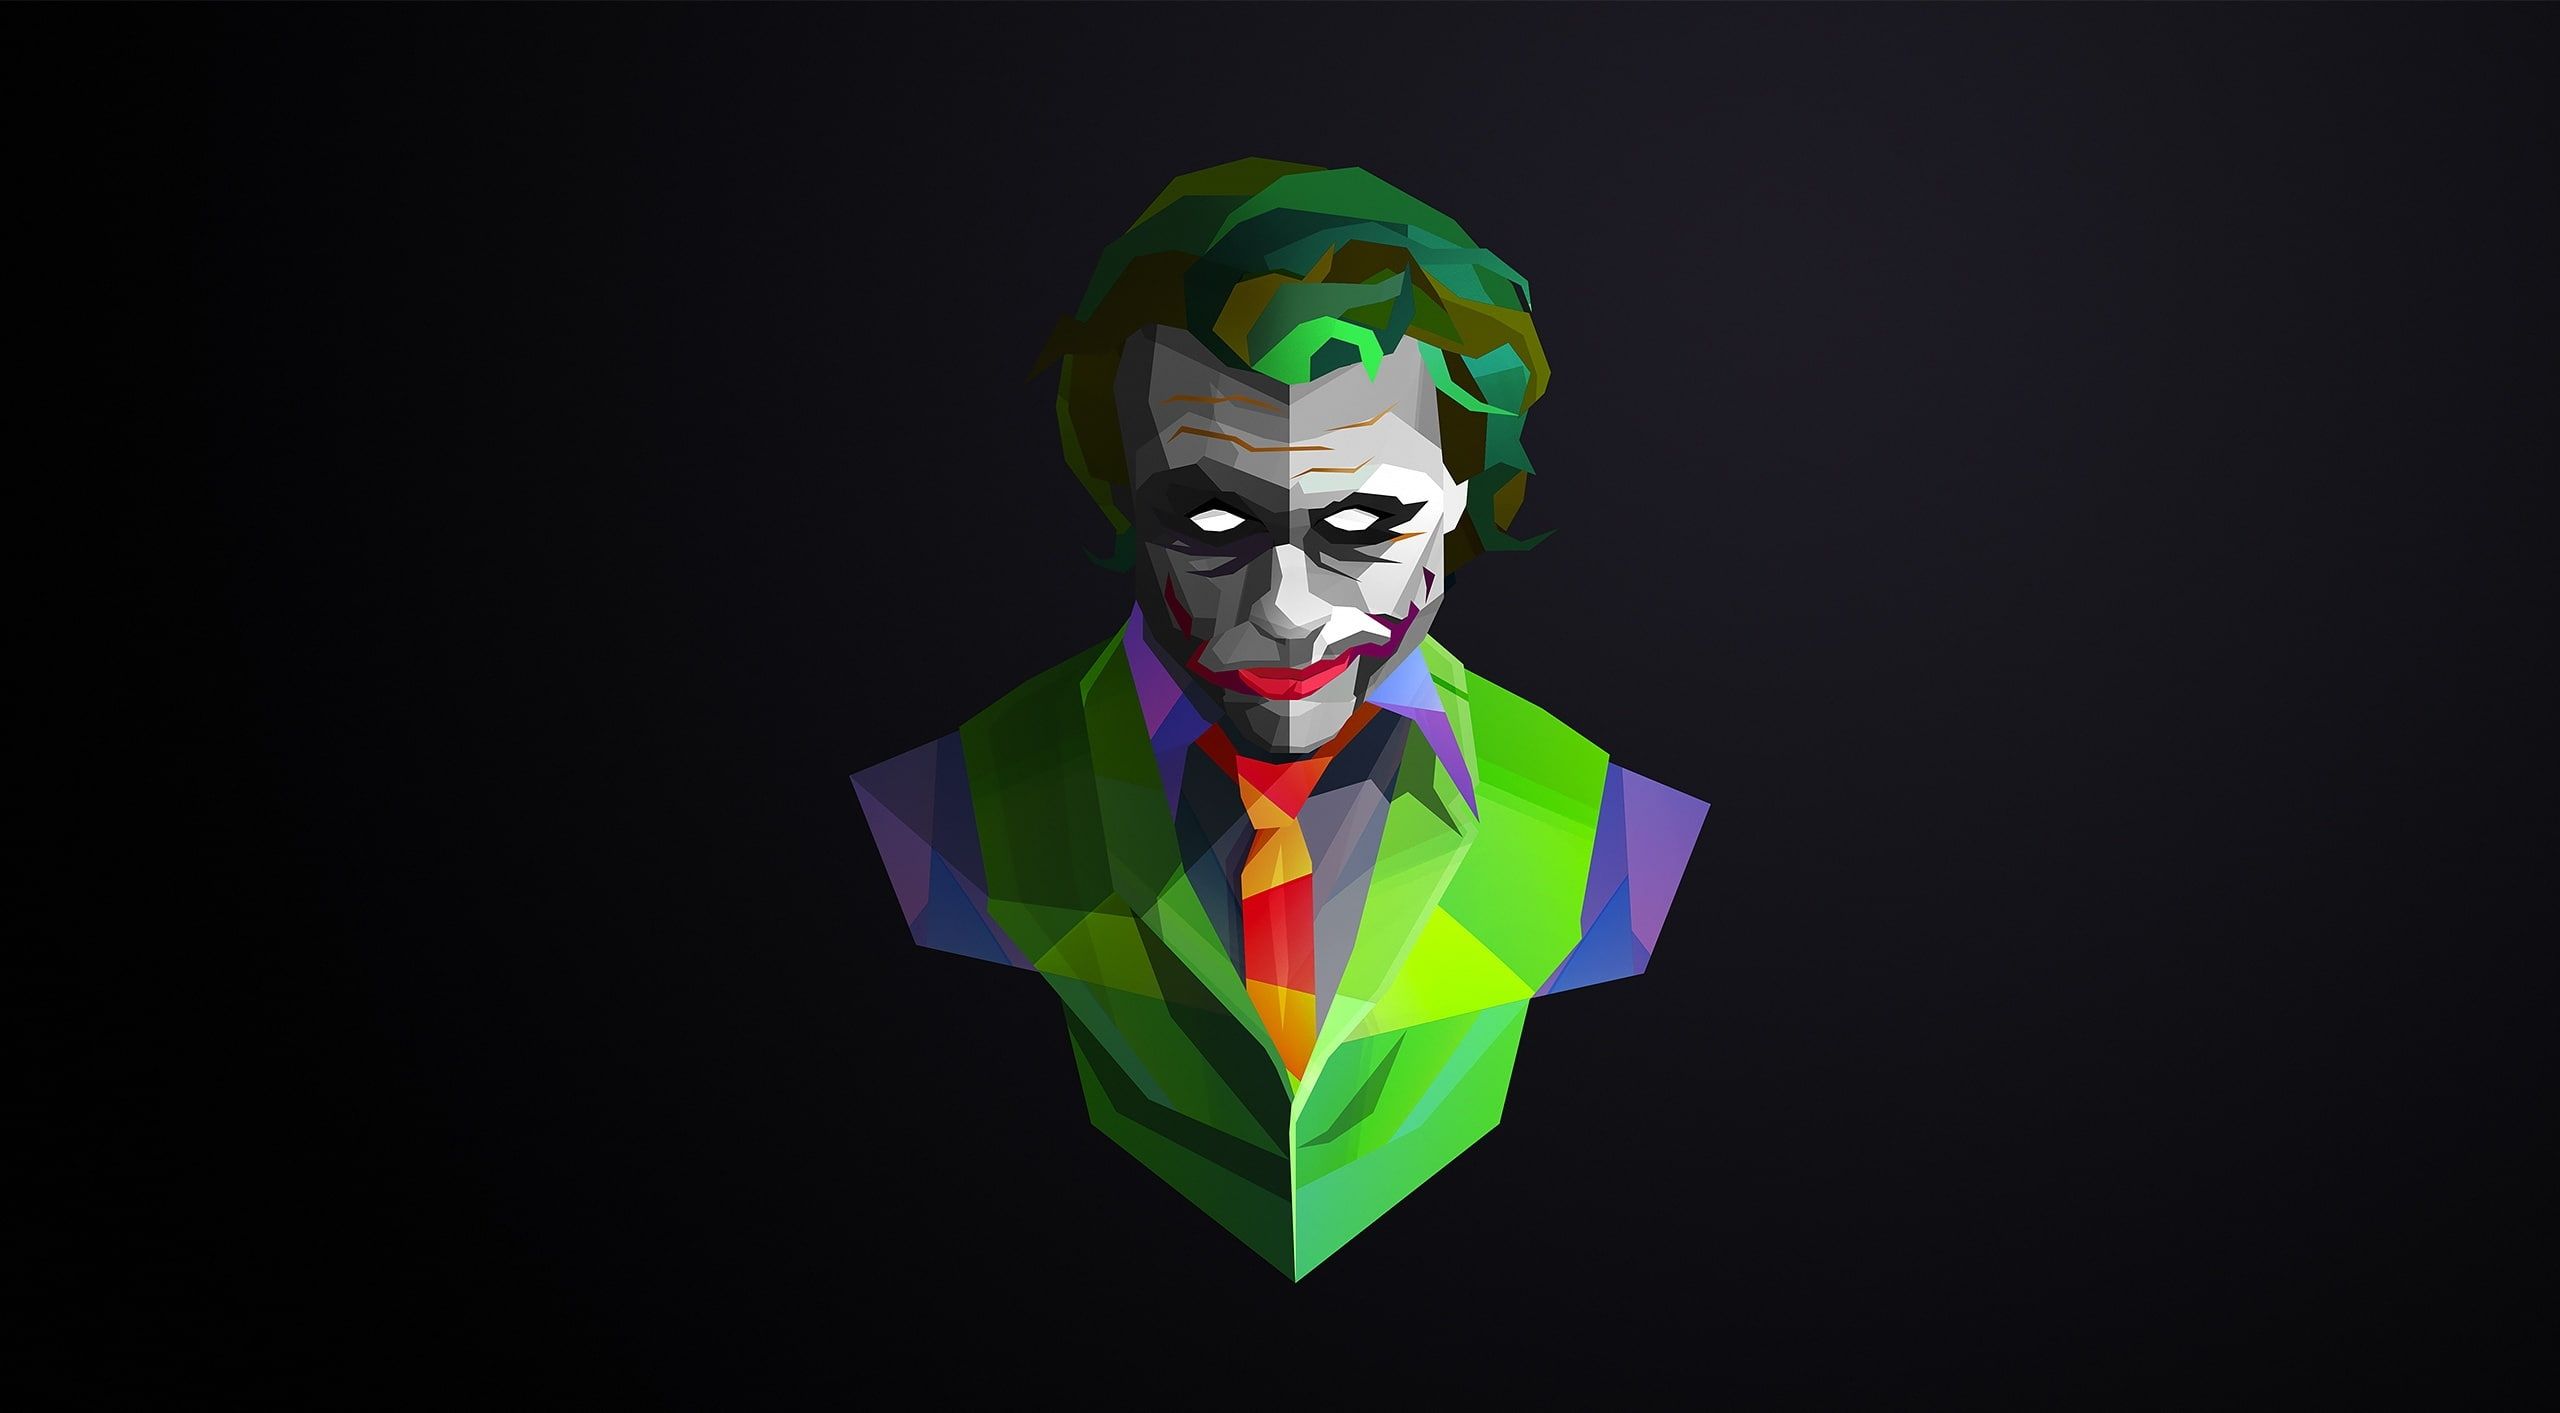 HD wallpaper: Joker, The Joker vector art, Movies, Batman, Colorful, Colors